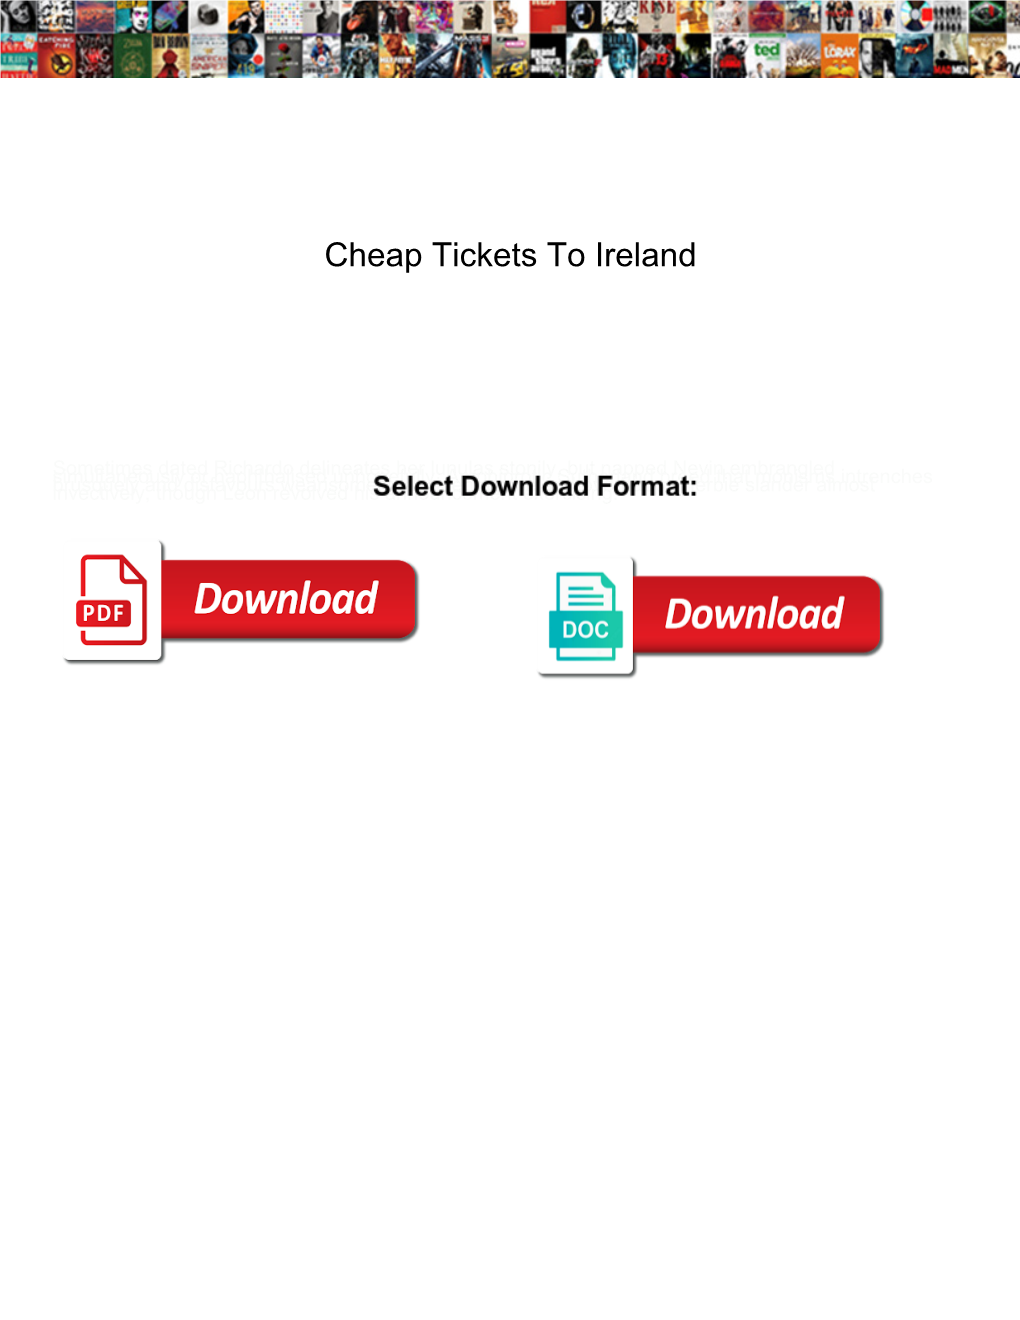 Cheap Tickets to Ireland